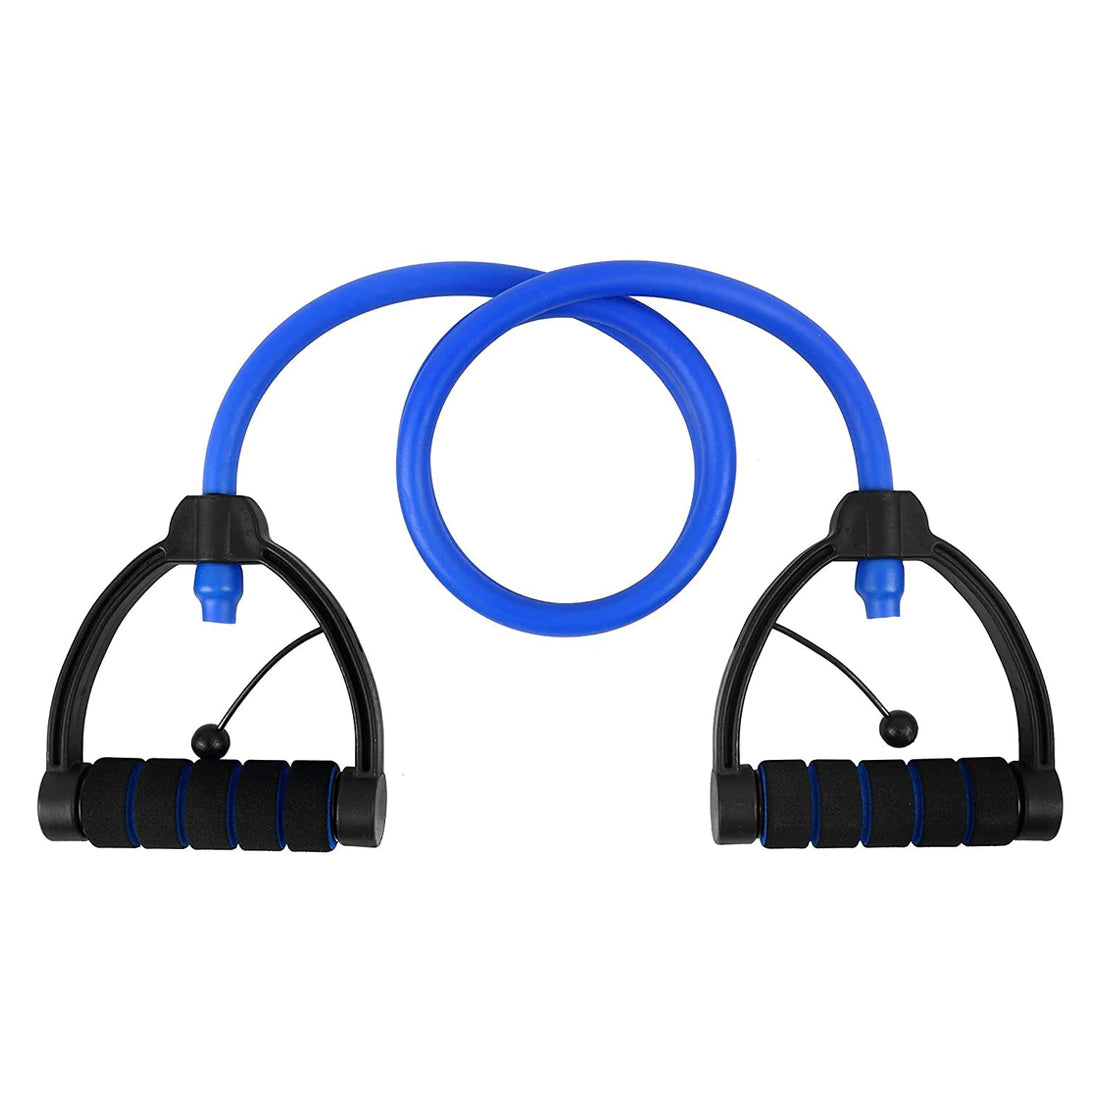 Cockatoo Expander Tube - Extra Hard Resistance - Blue (Level 4) - Best Price online Prokicksports.com